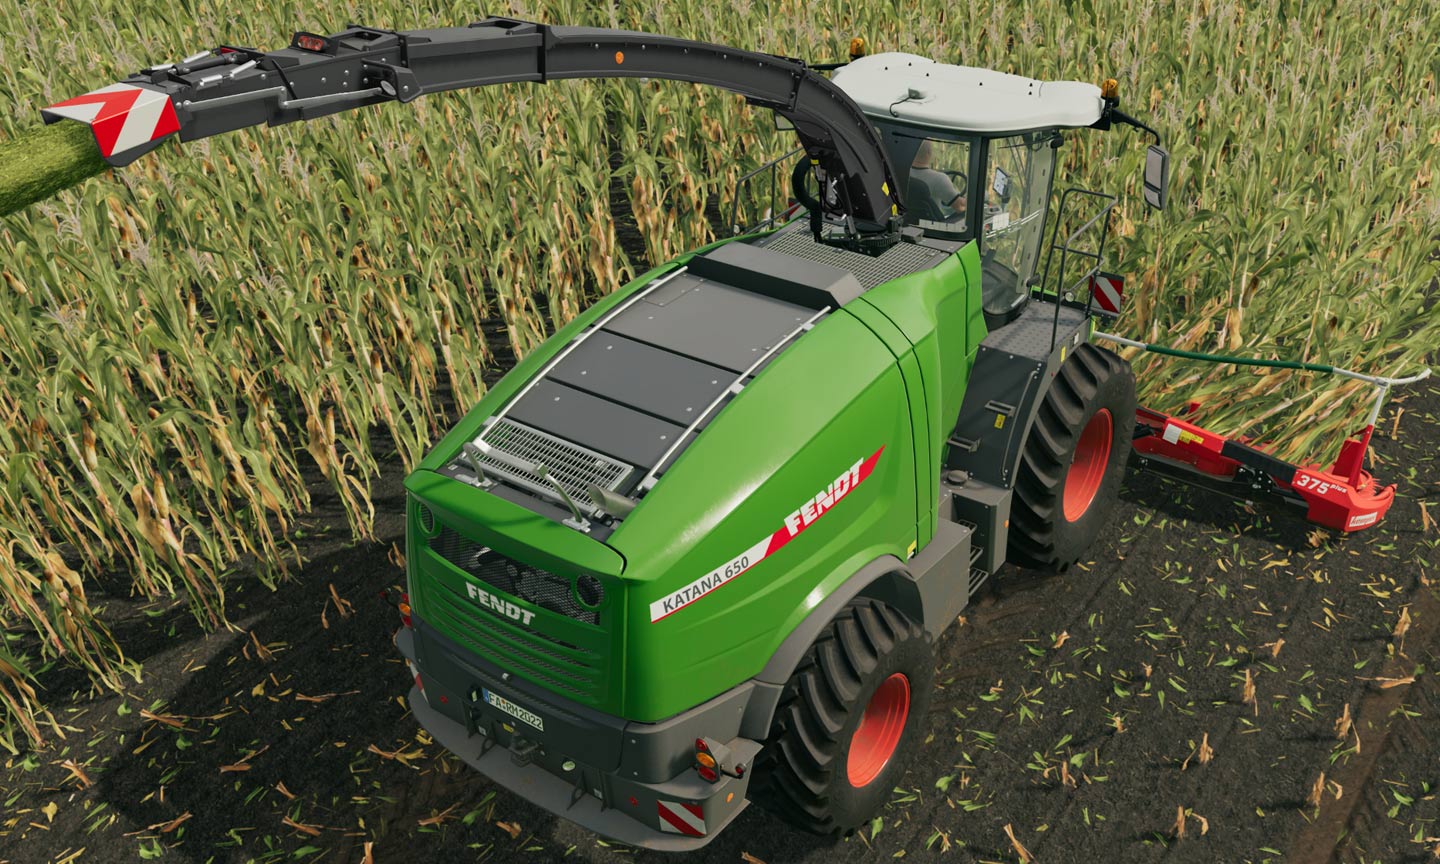 Fendt Kantana 650 in Landwirtschafts-Simulator 22. - (C) GIANTS Software